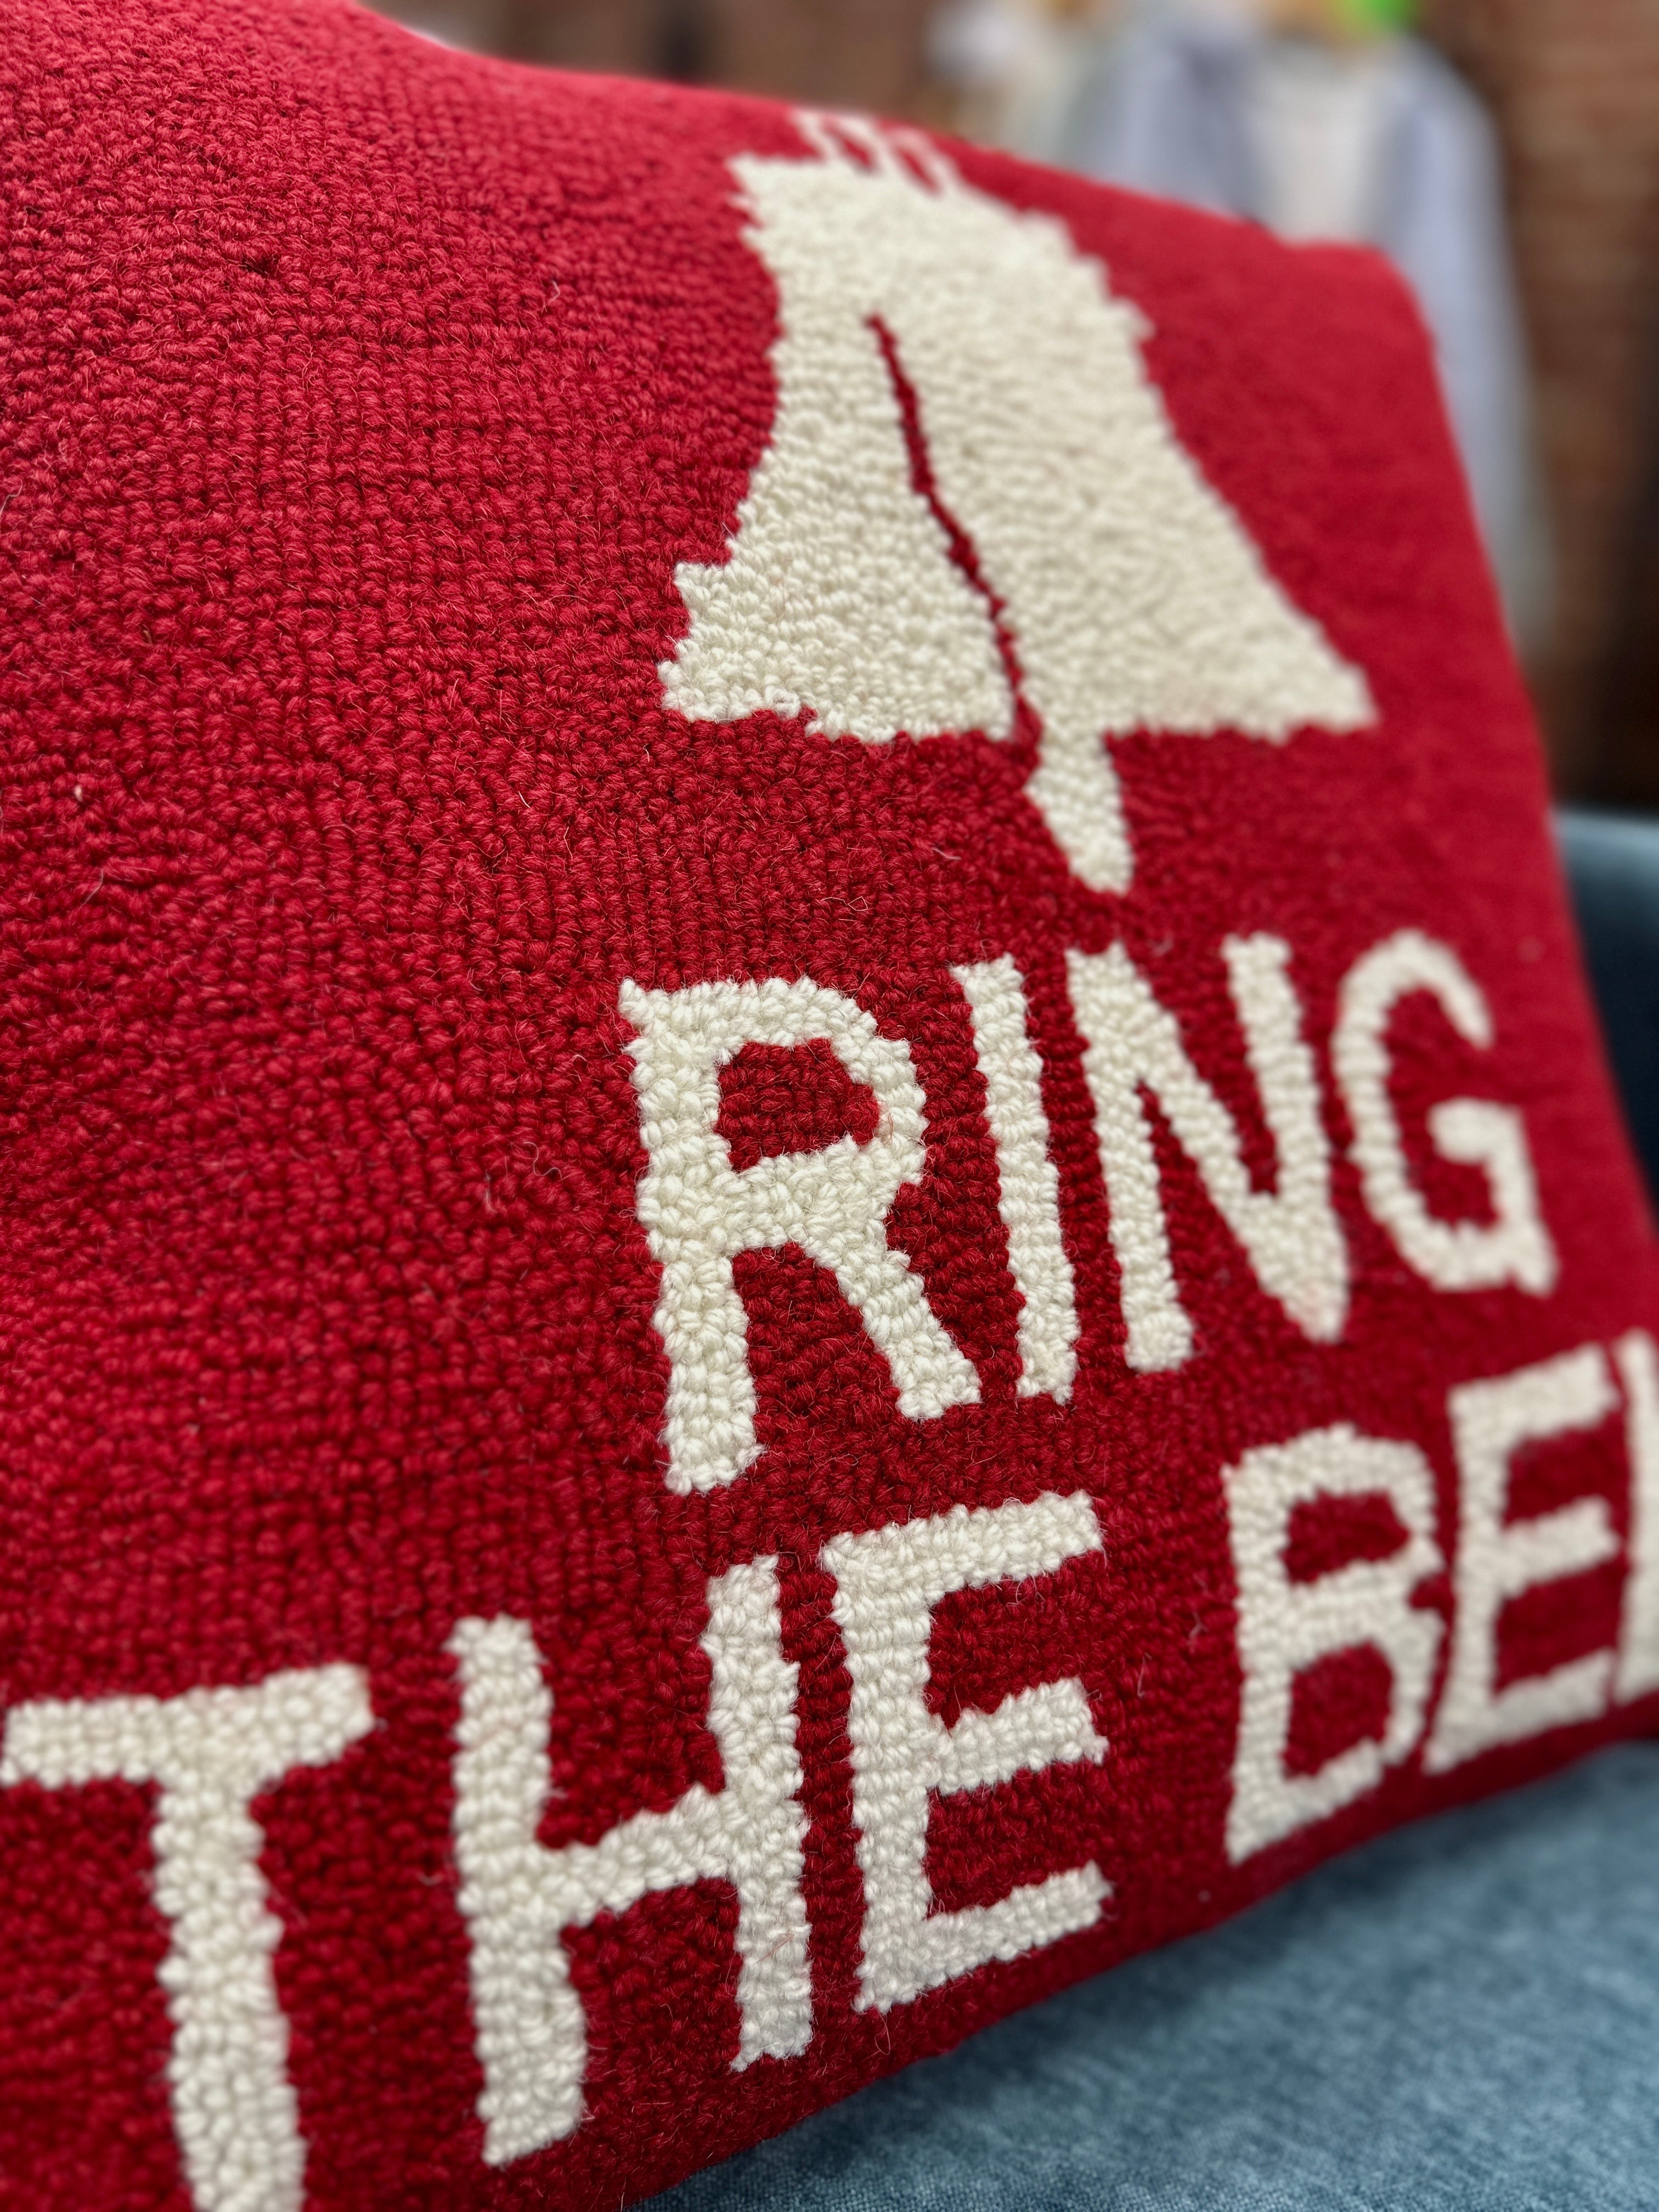 Ring The Bell Hook Pillow